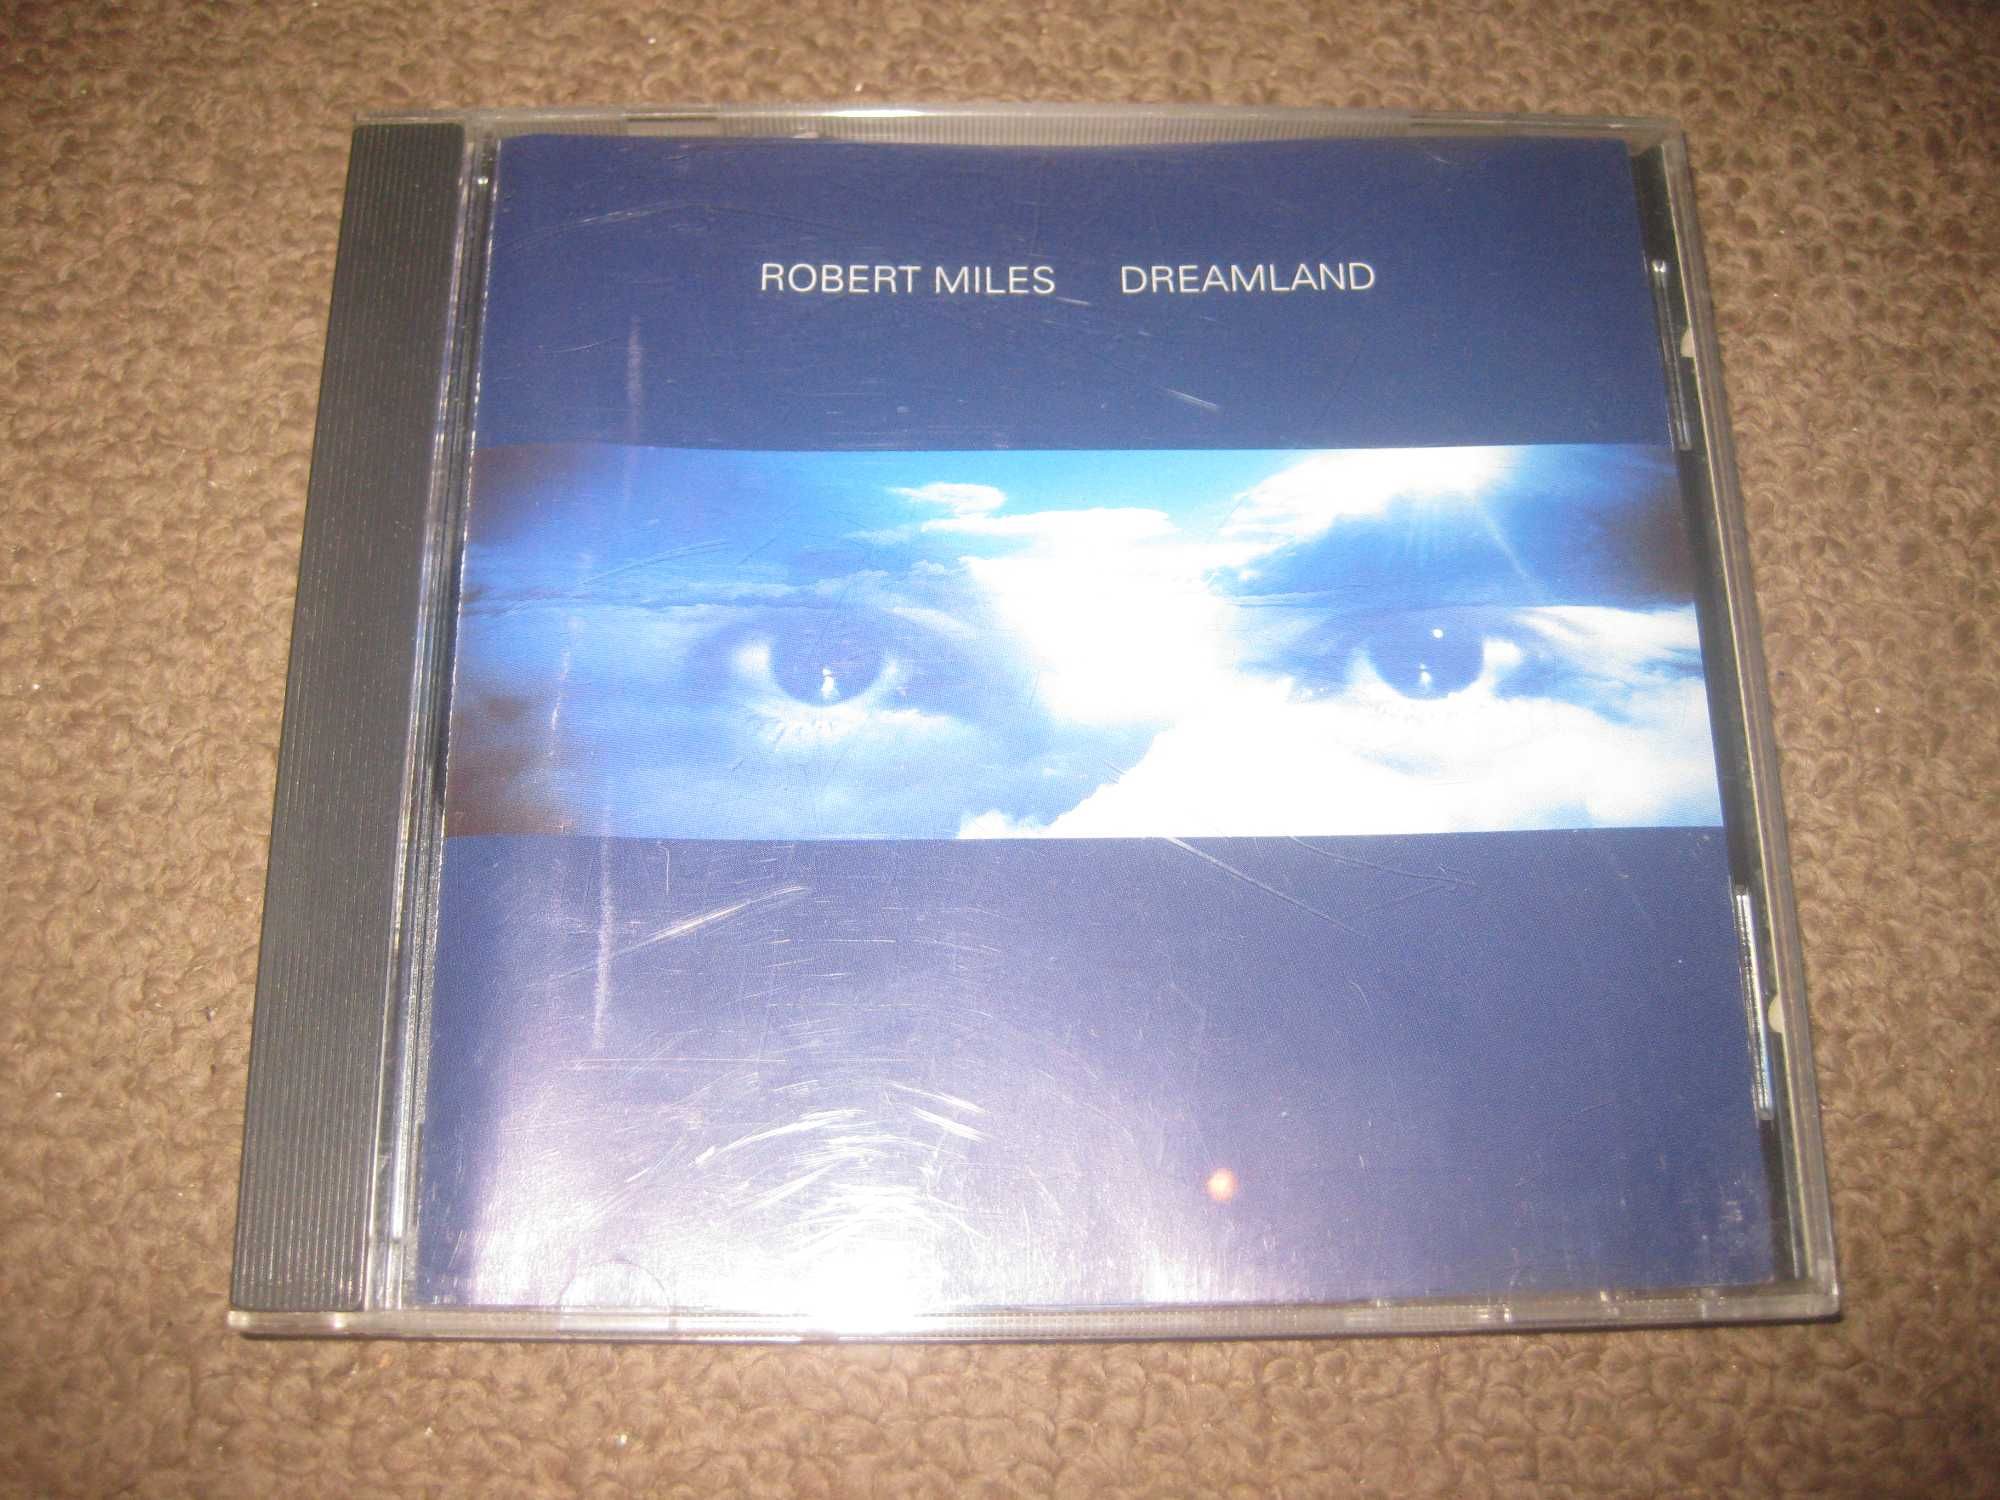 CD do Robert Miles "Dreamland"